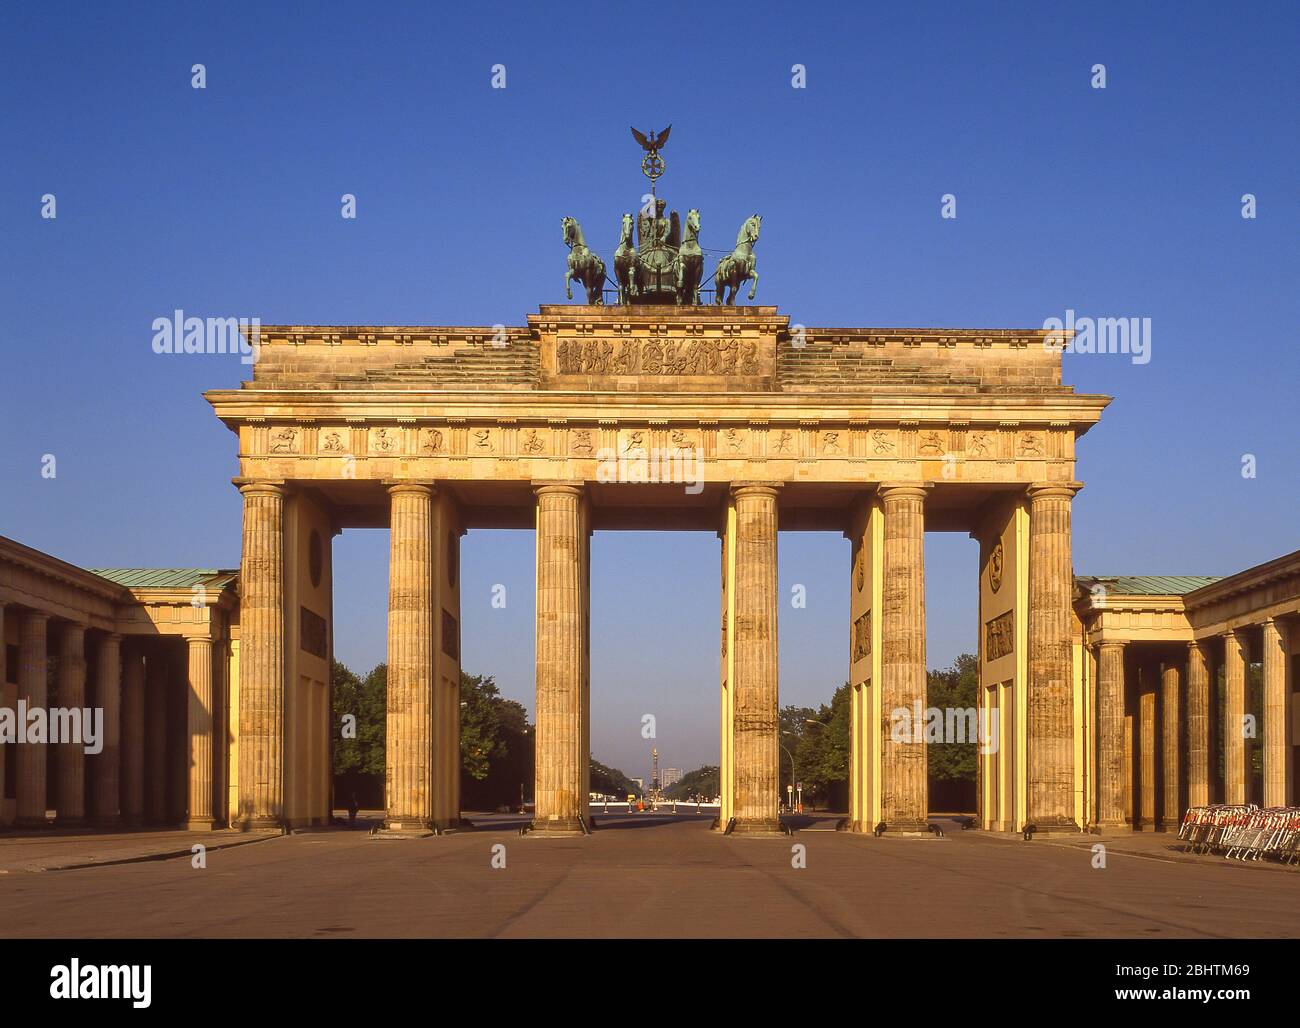 Porta di Brandeburgo (Brandenburger Tor) da Pariser Platz, Mitte, Berlino, Repubblica federale di Germania Foto Stock